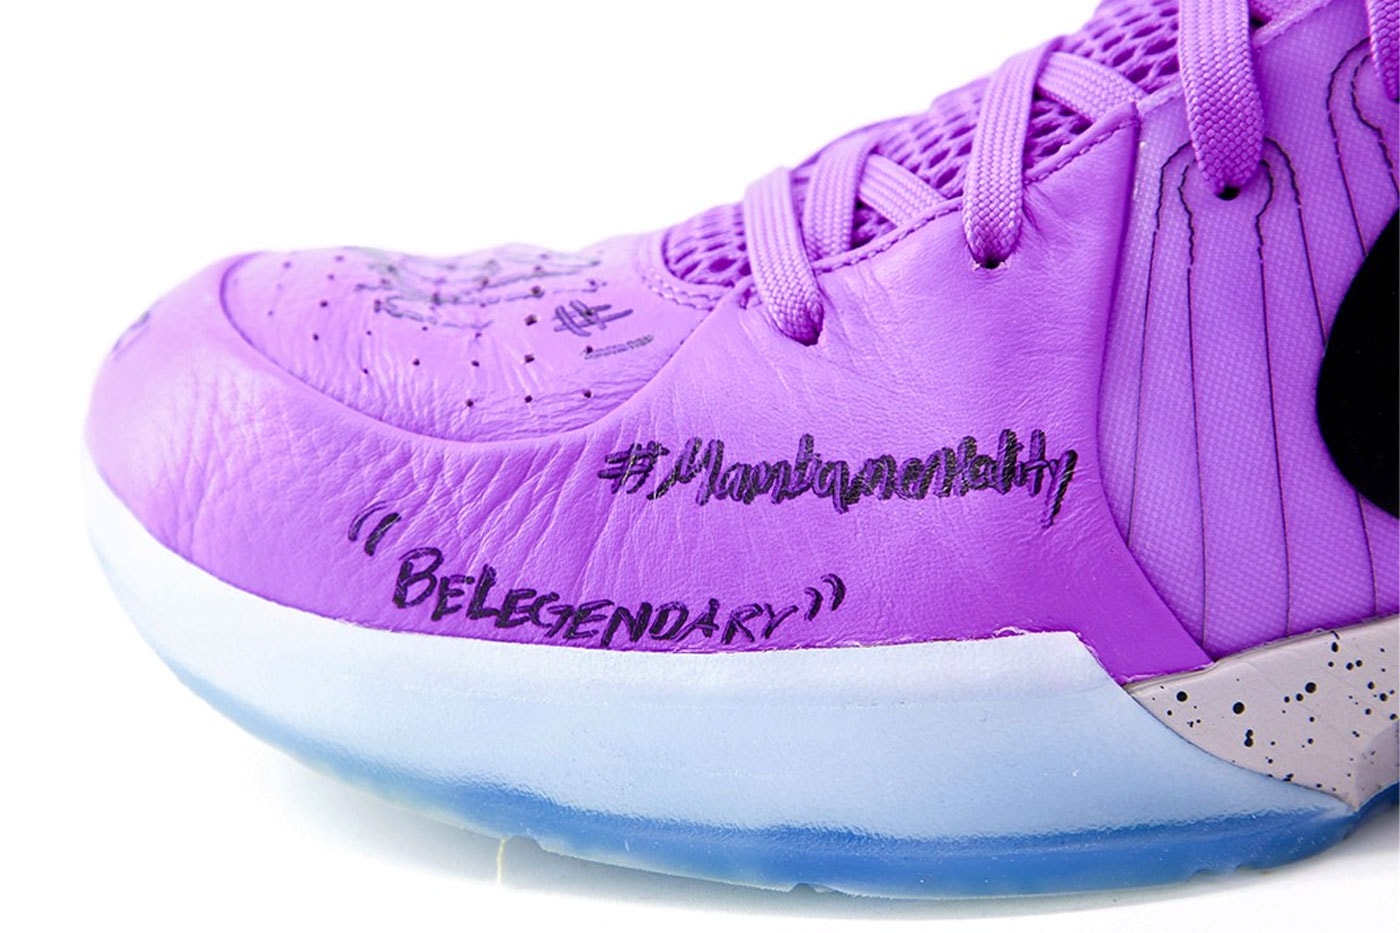 devin booker shoes purple